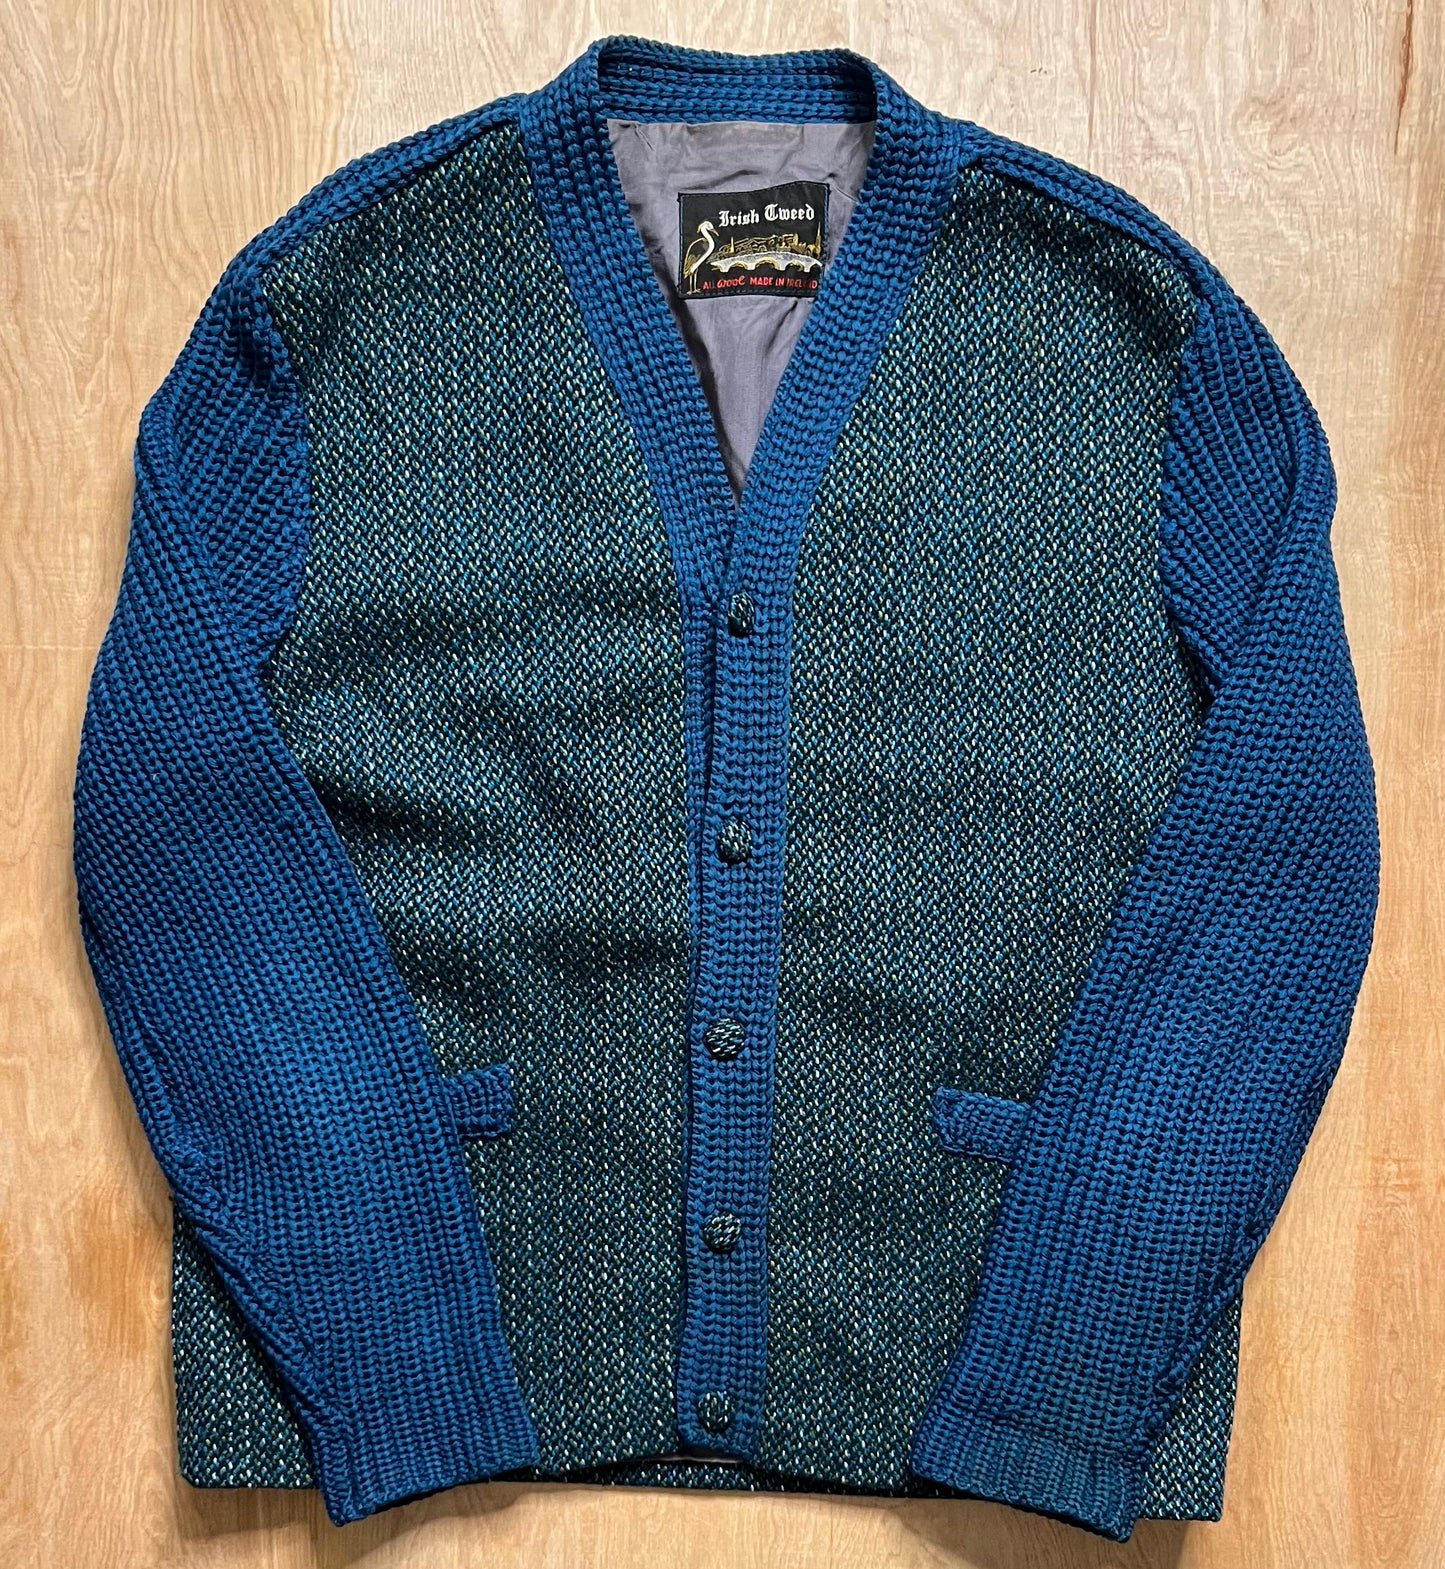 Vintage Irish Tweed Wool Cardigan Sweater